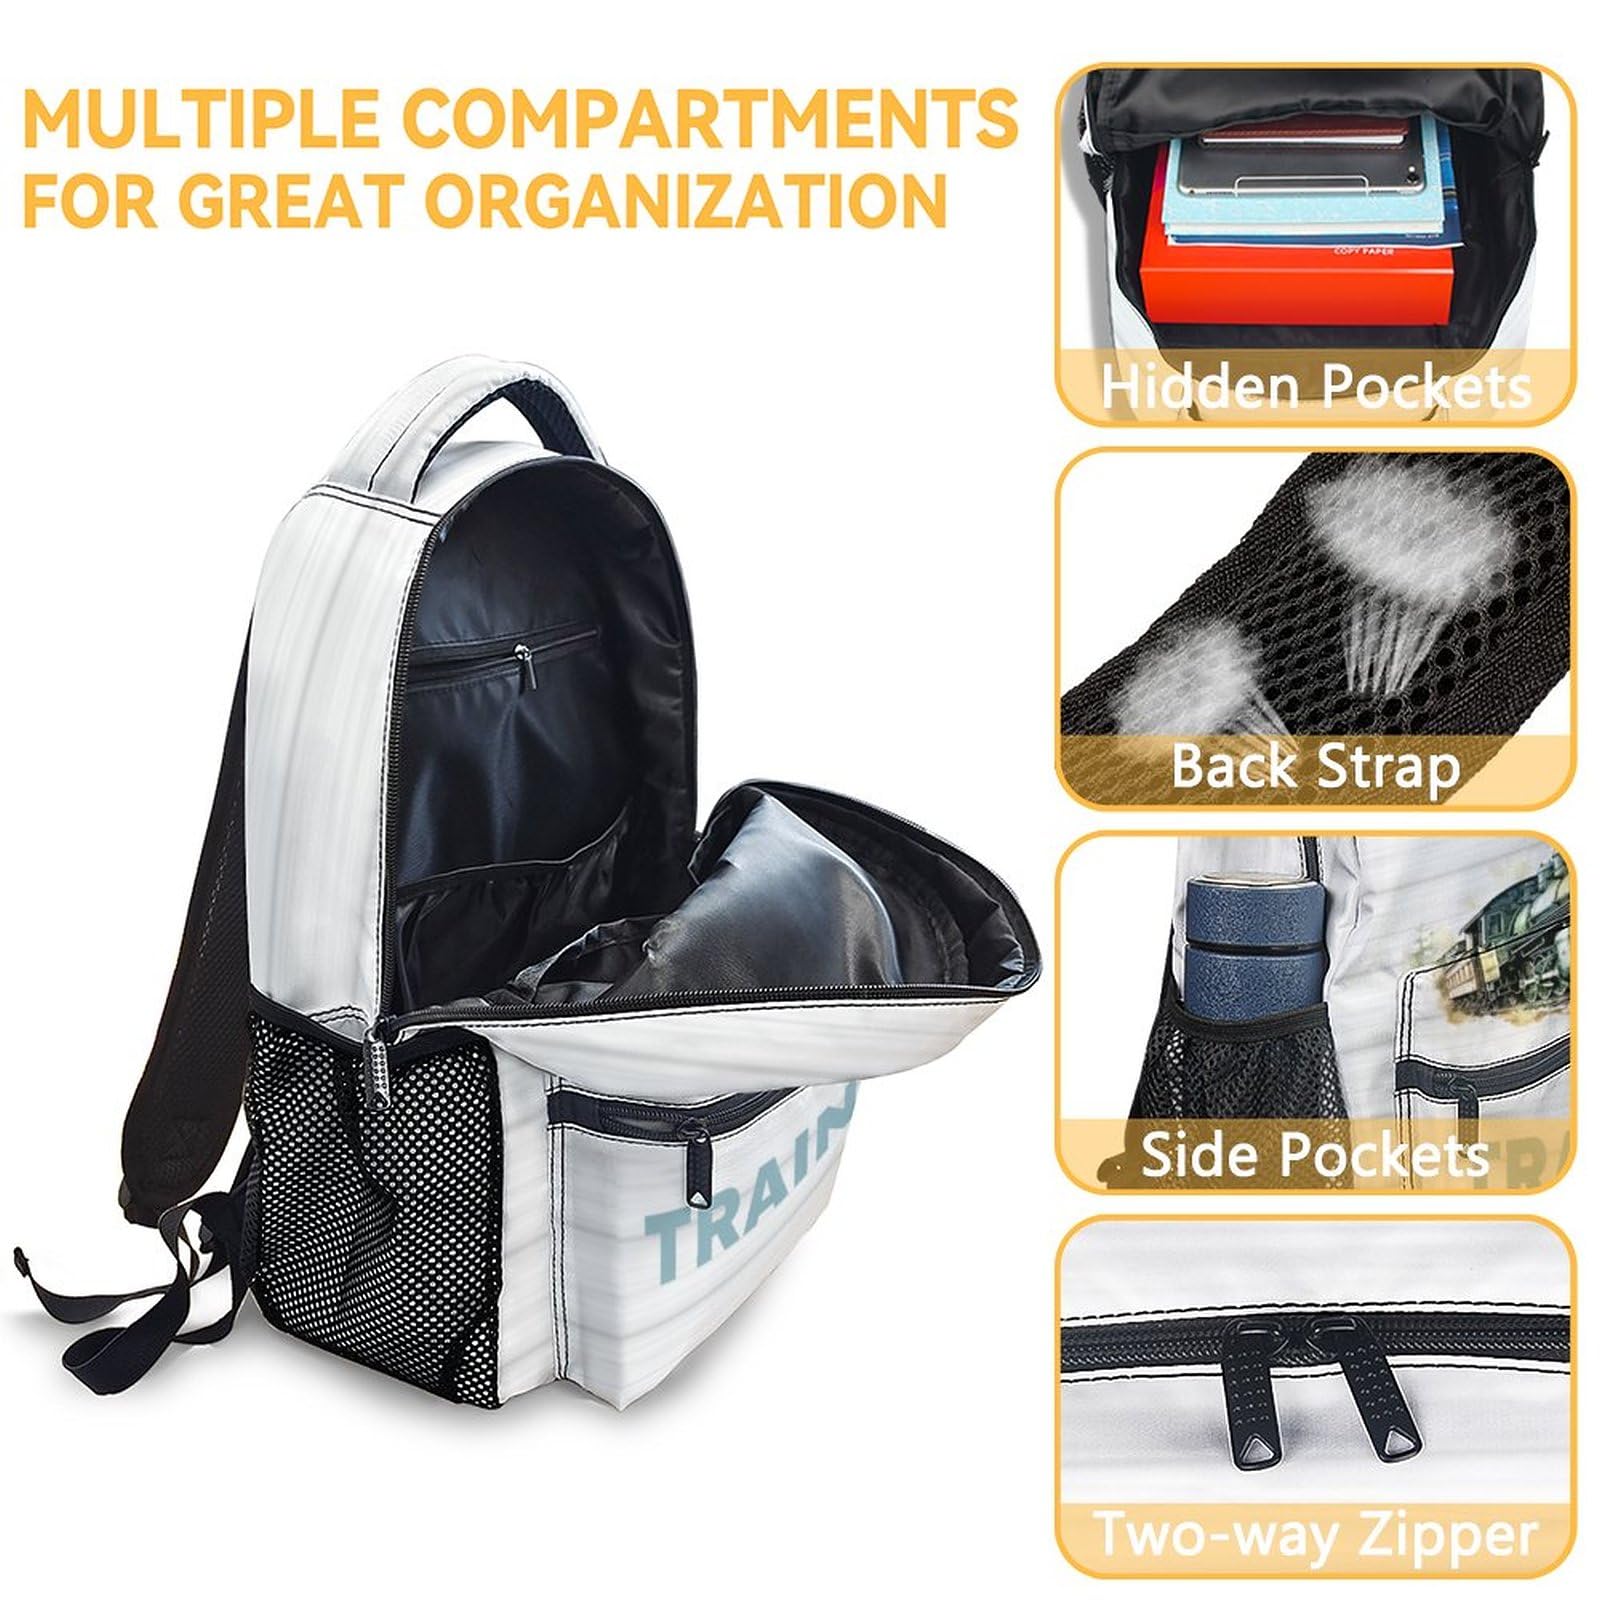 AIOMXZZ Train School Backpack for Kids, 16 Inch Blue Backpacks for Boys, Cartoon, Durable, Lightweight, Large Capacity Bookbag for Travel